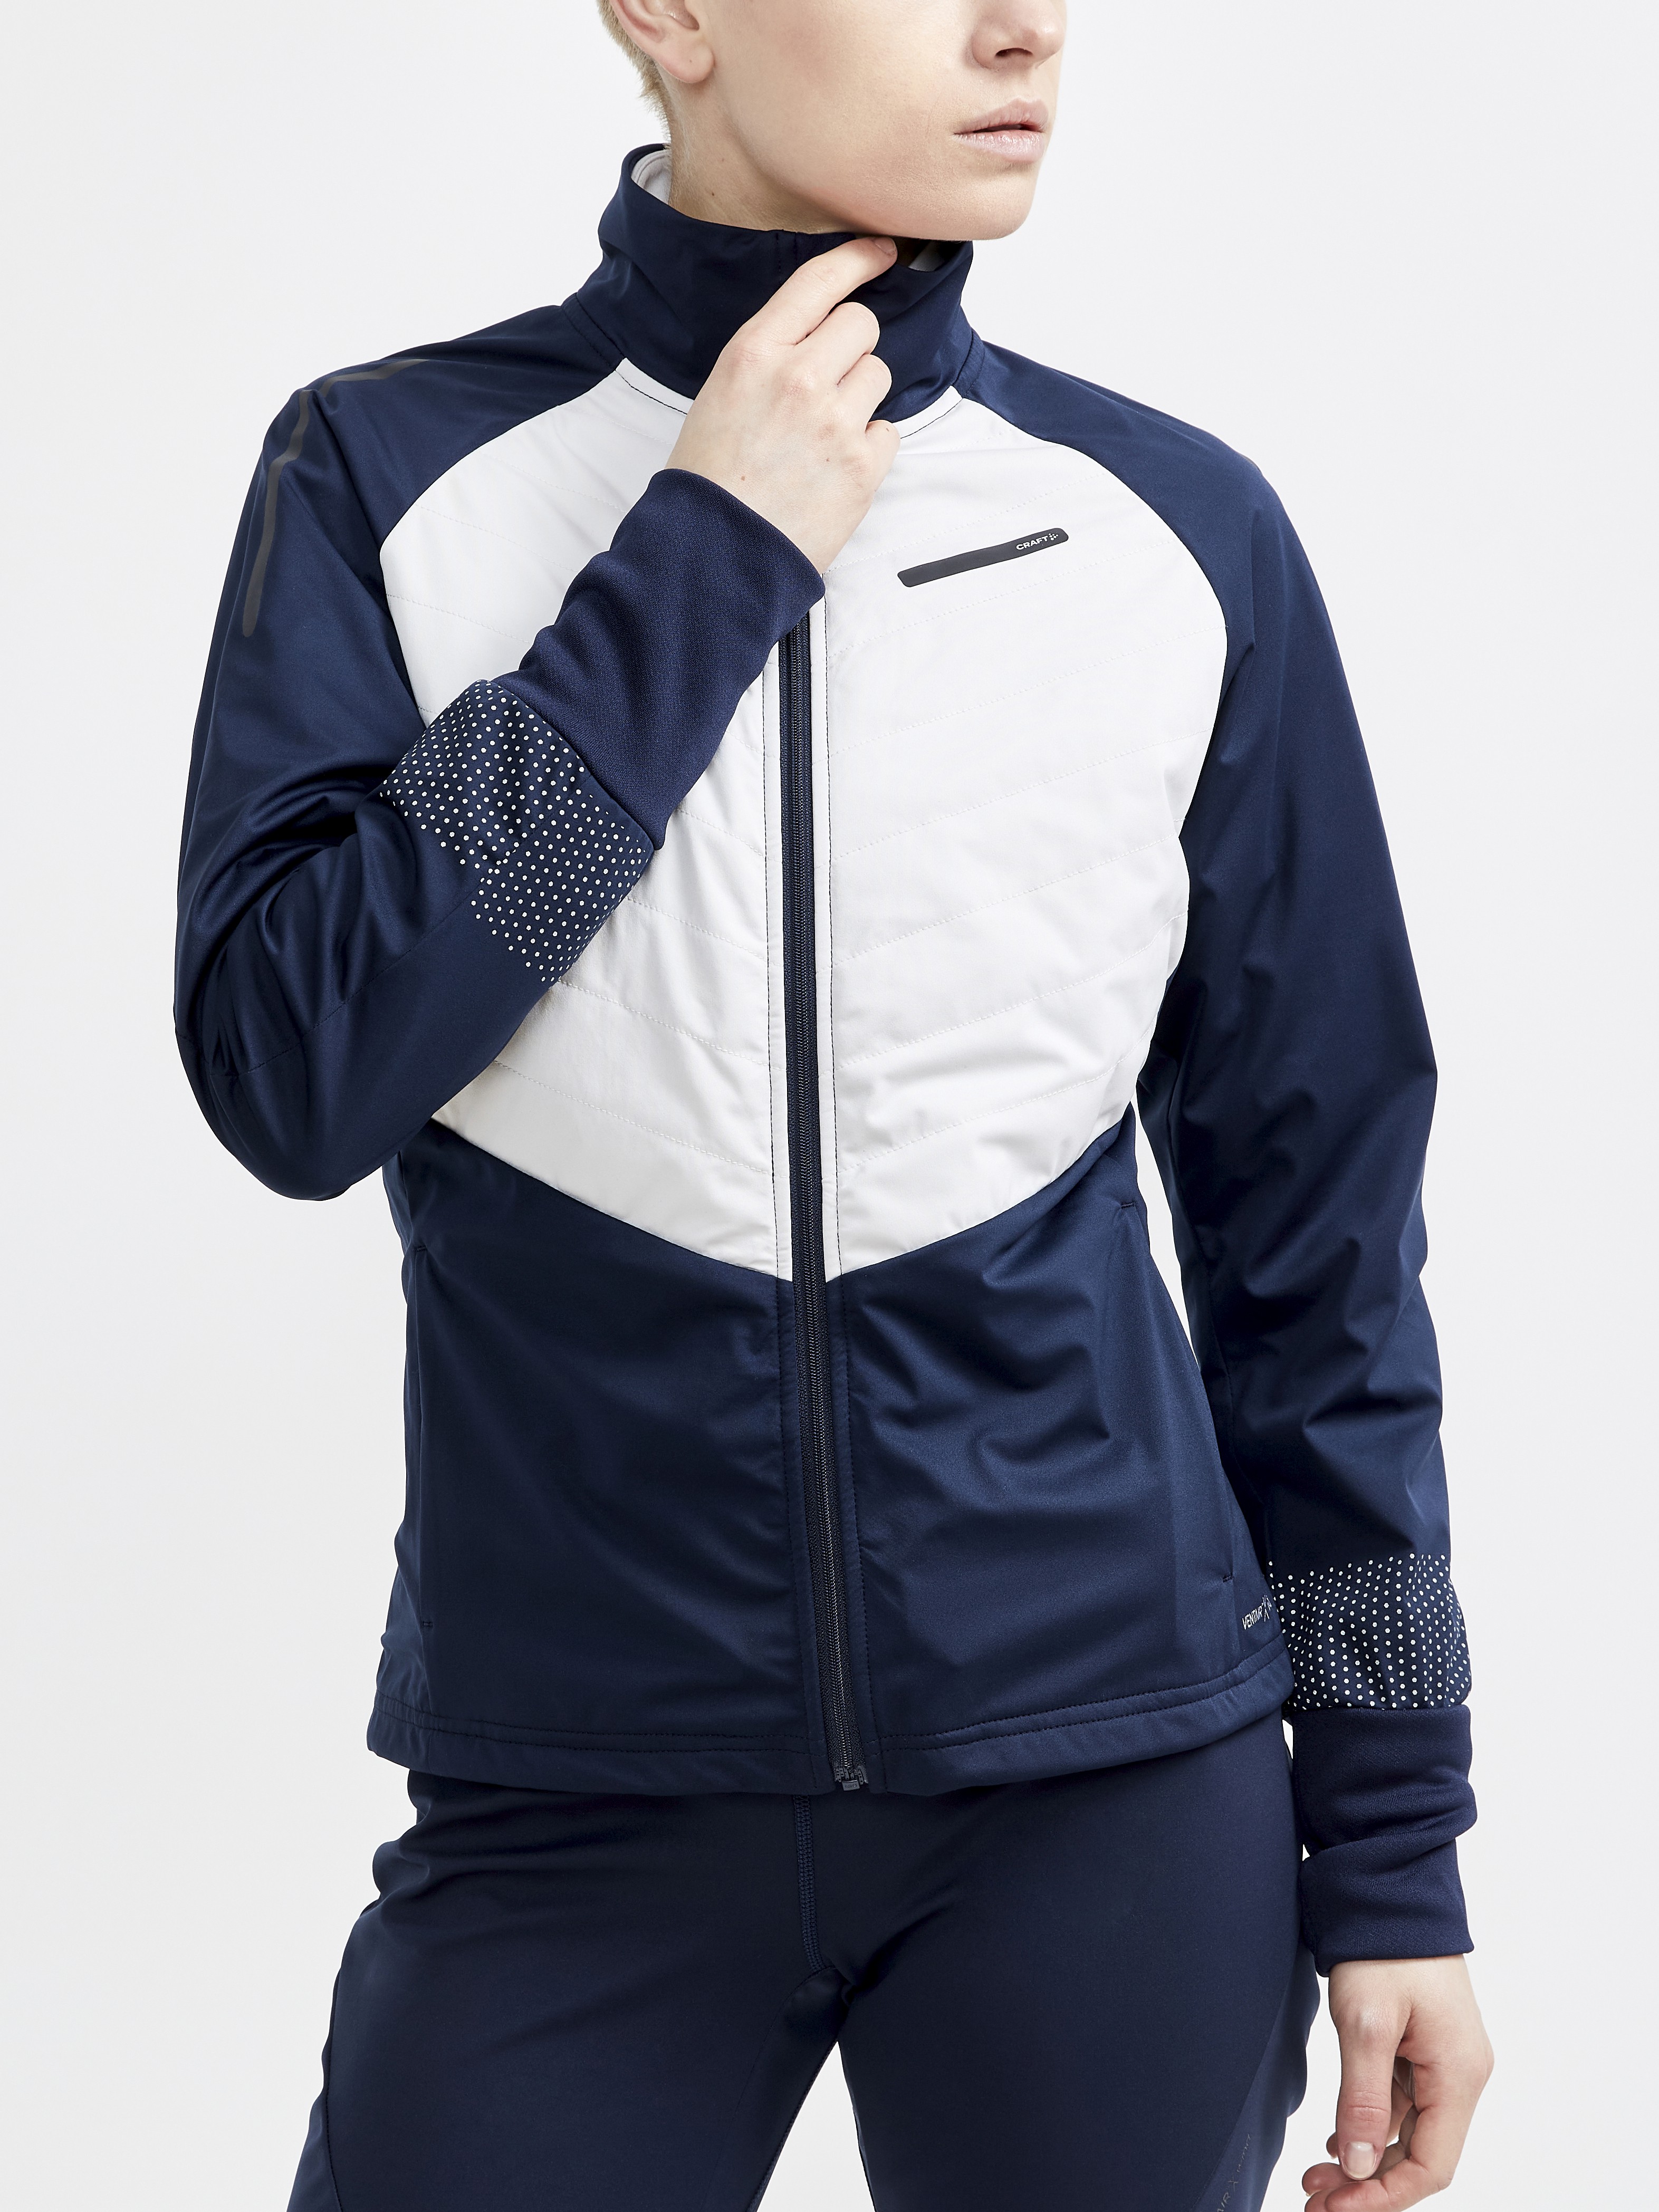 ADV Nordic Training Jacket W Sportswear | Craft - Navy blue